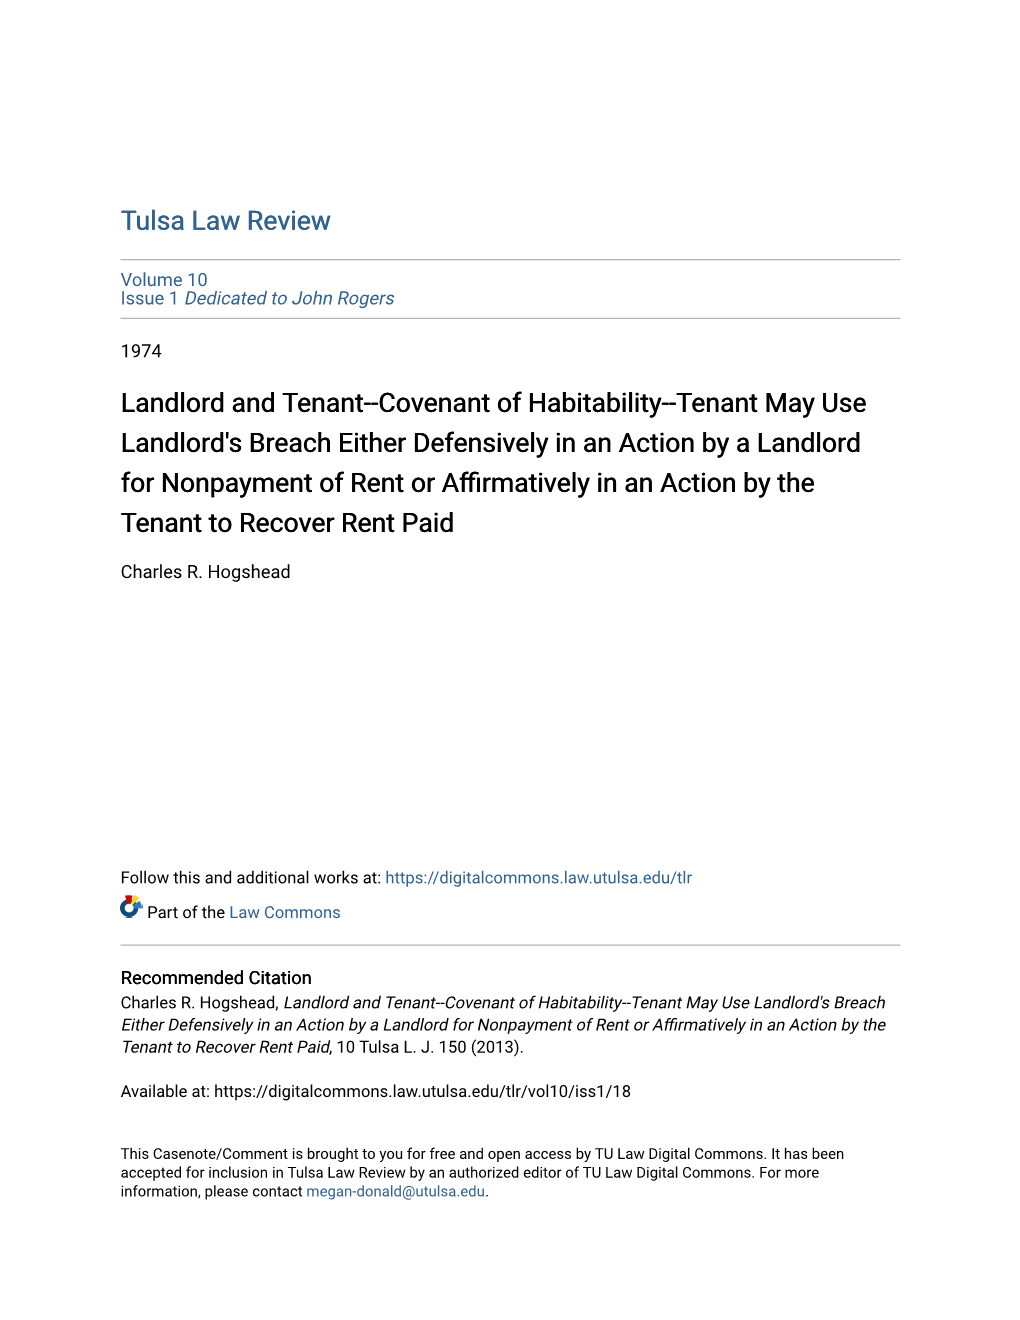 Landlord and Tenant--Covenant of Habitability--Tenant May Use